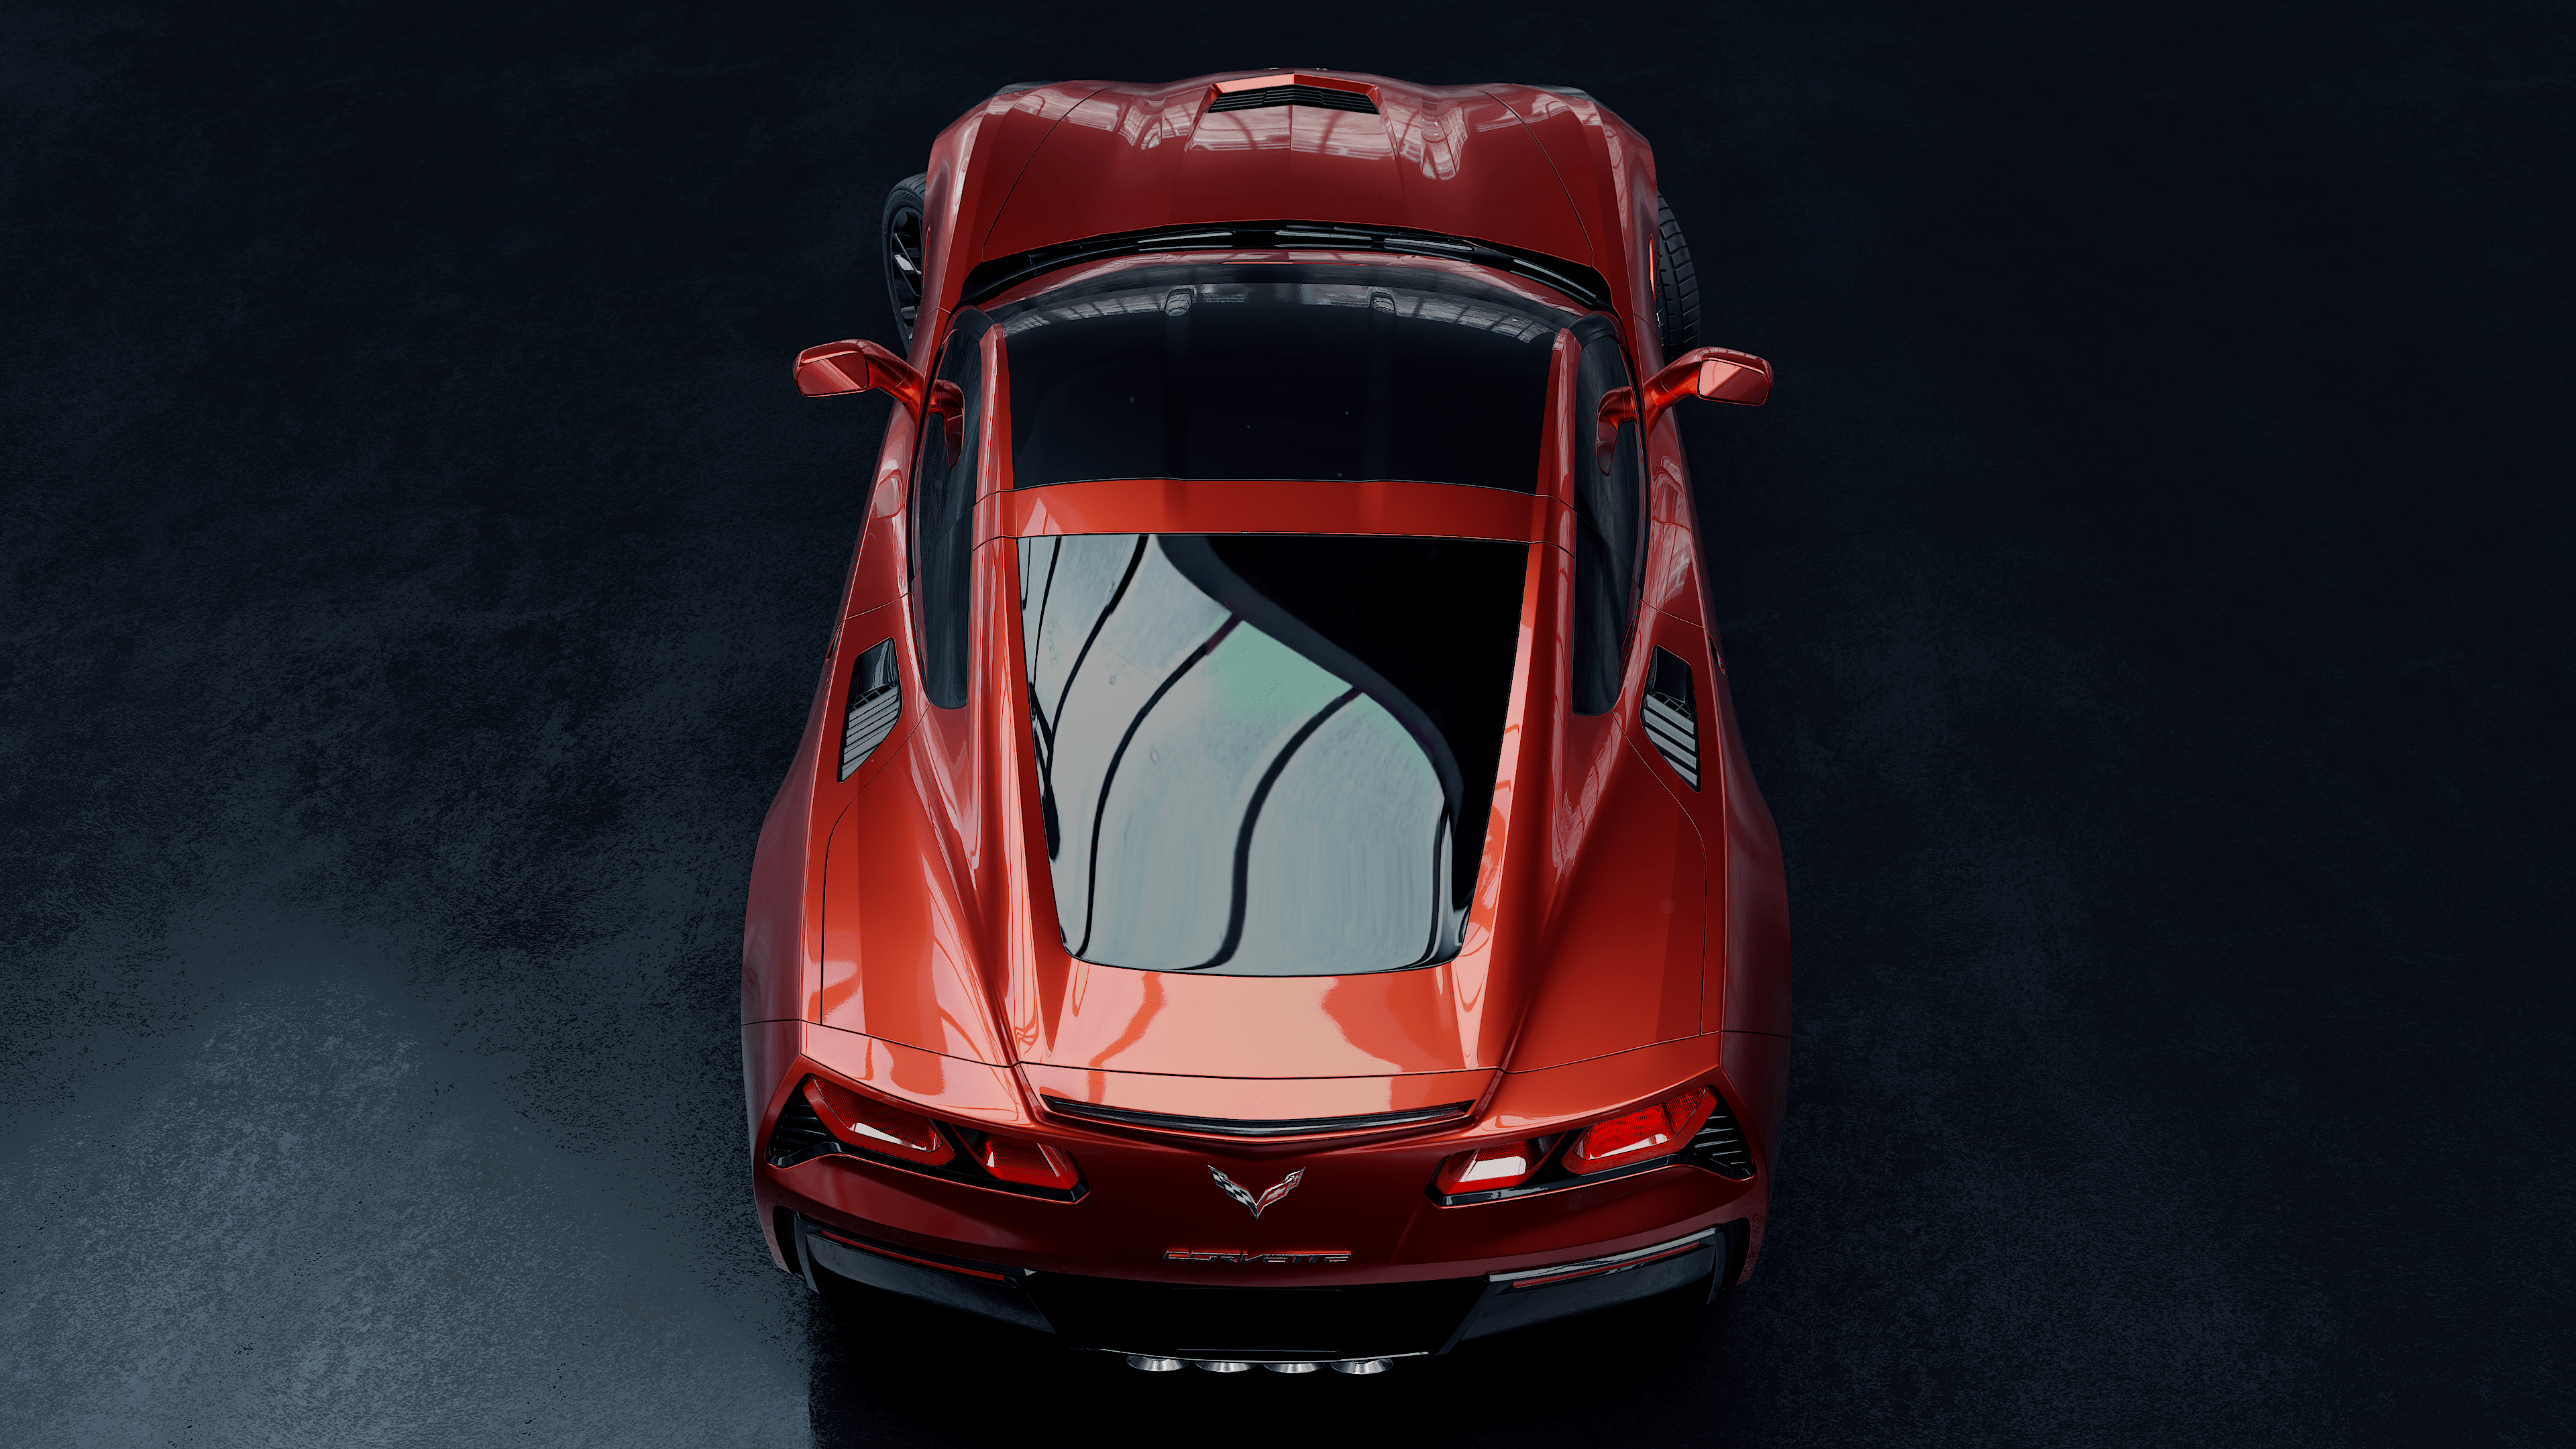 imagen de Chevrolet Corvette en Blender cycles render